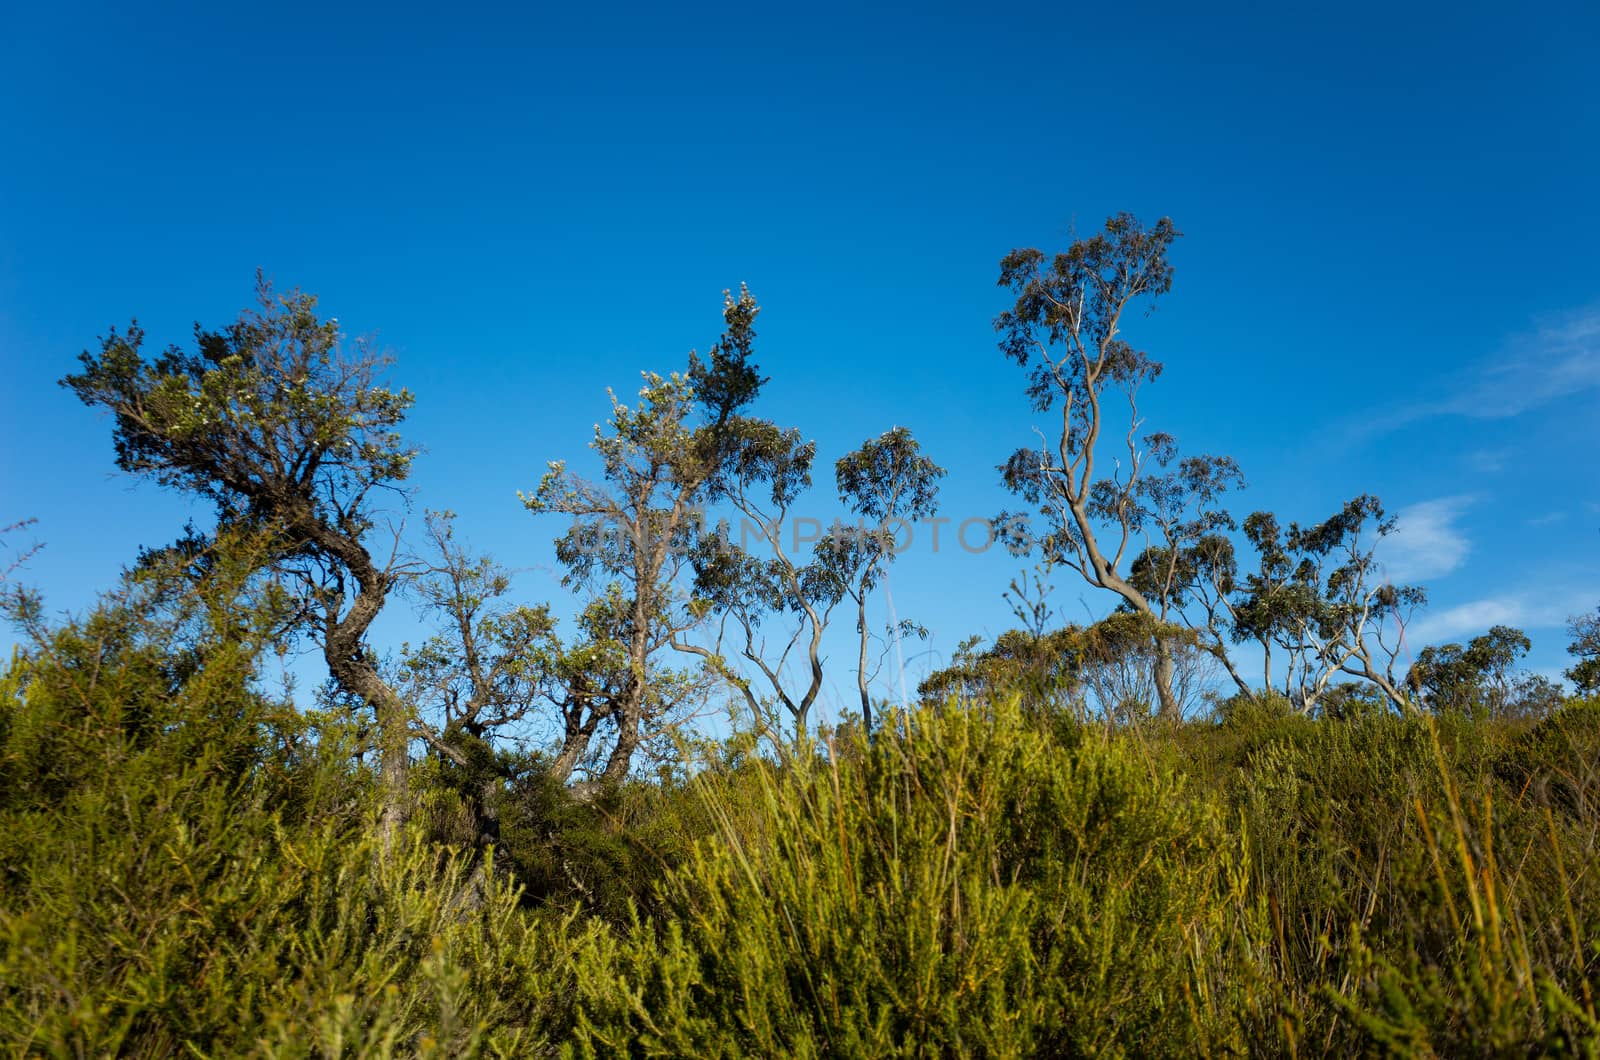 Australian Bush Landscape With Native Shrubs and Eucalyptus Tree by jaaske